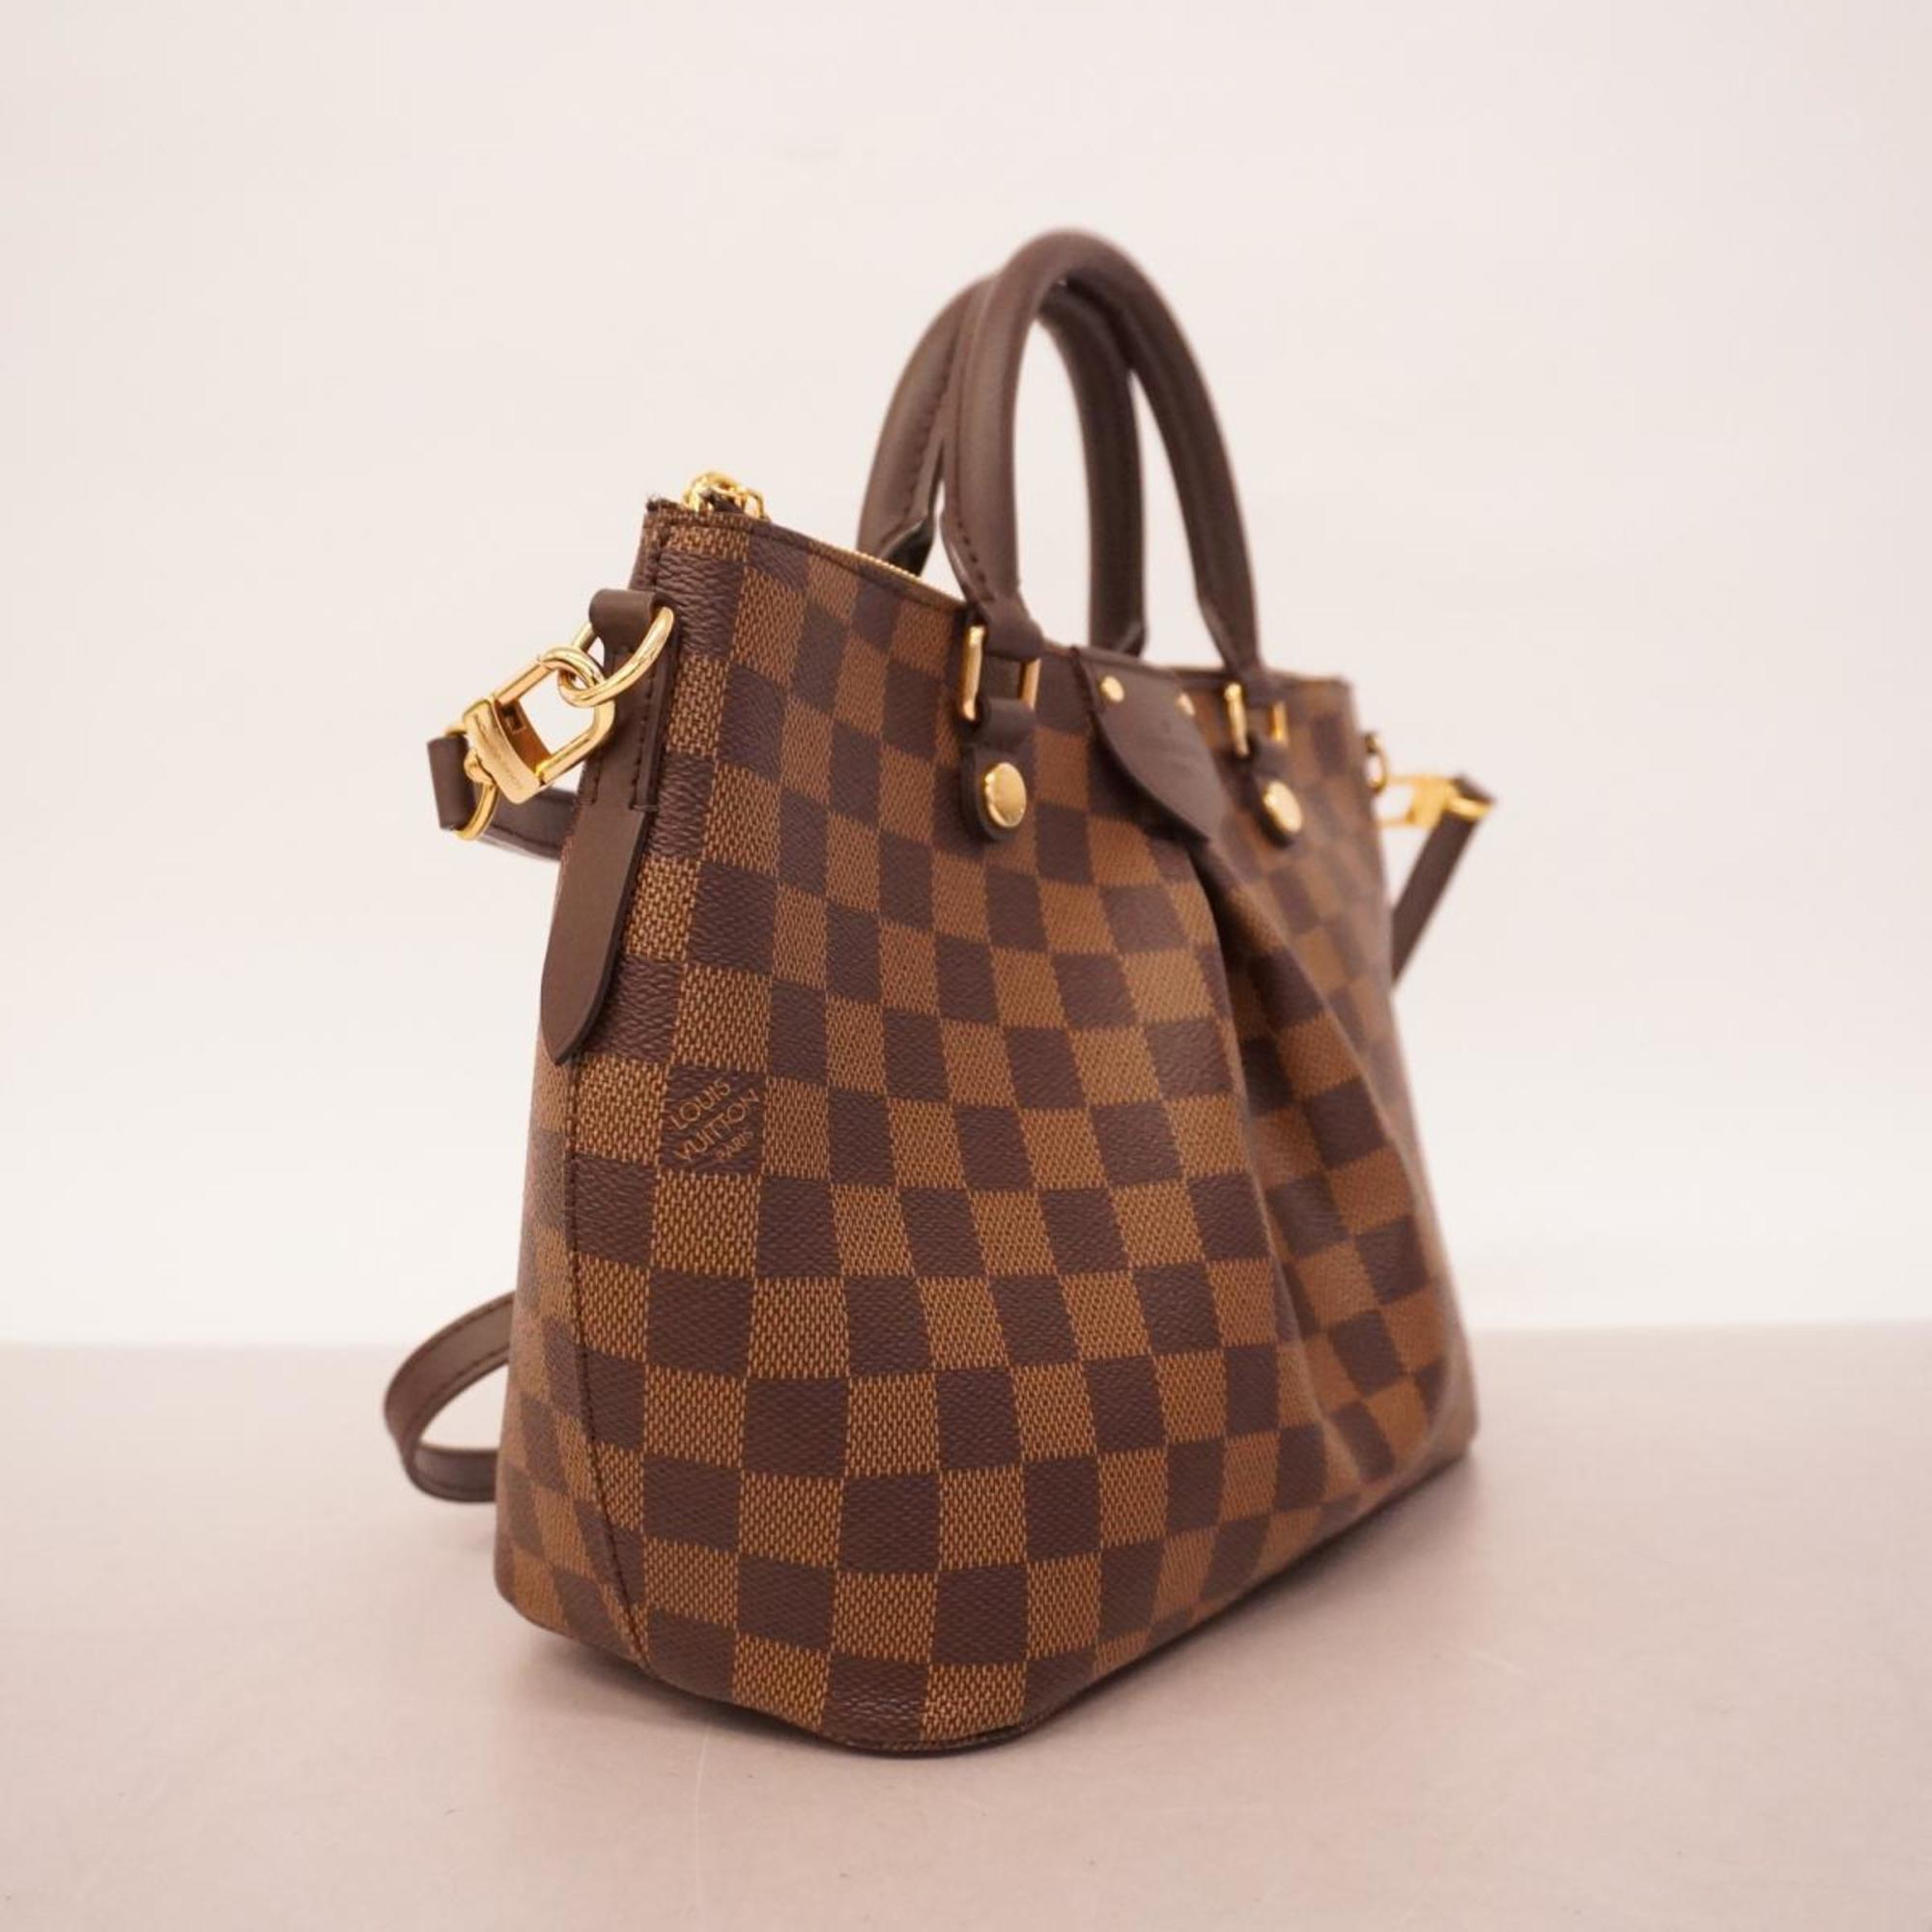 Louis Vuitton Handbag Damier Sienna PM N41545 Ebene Ladies